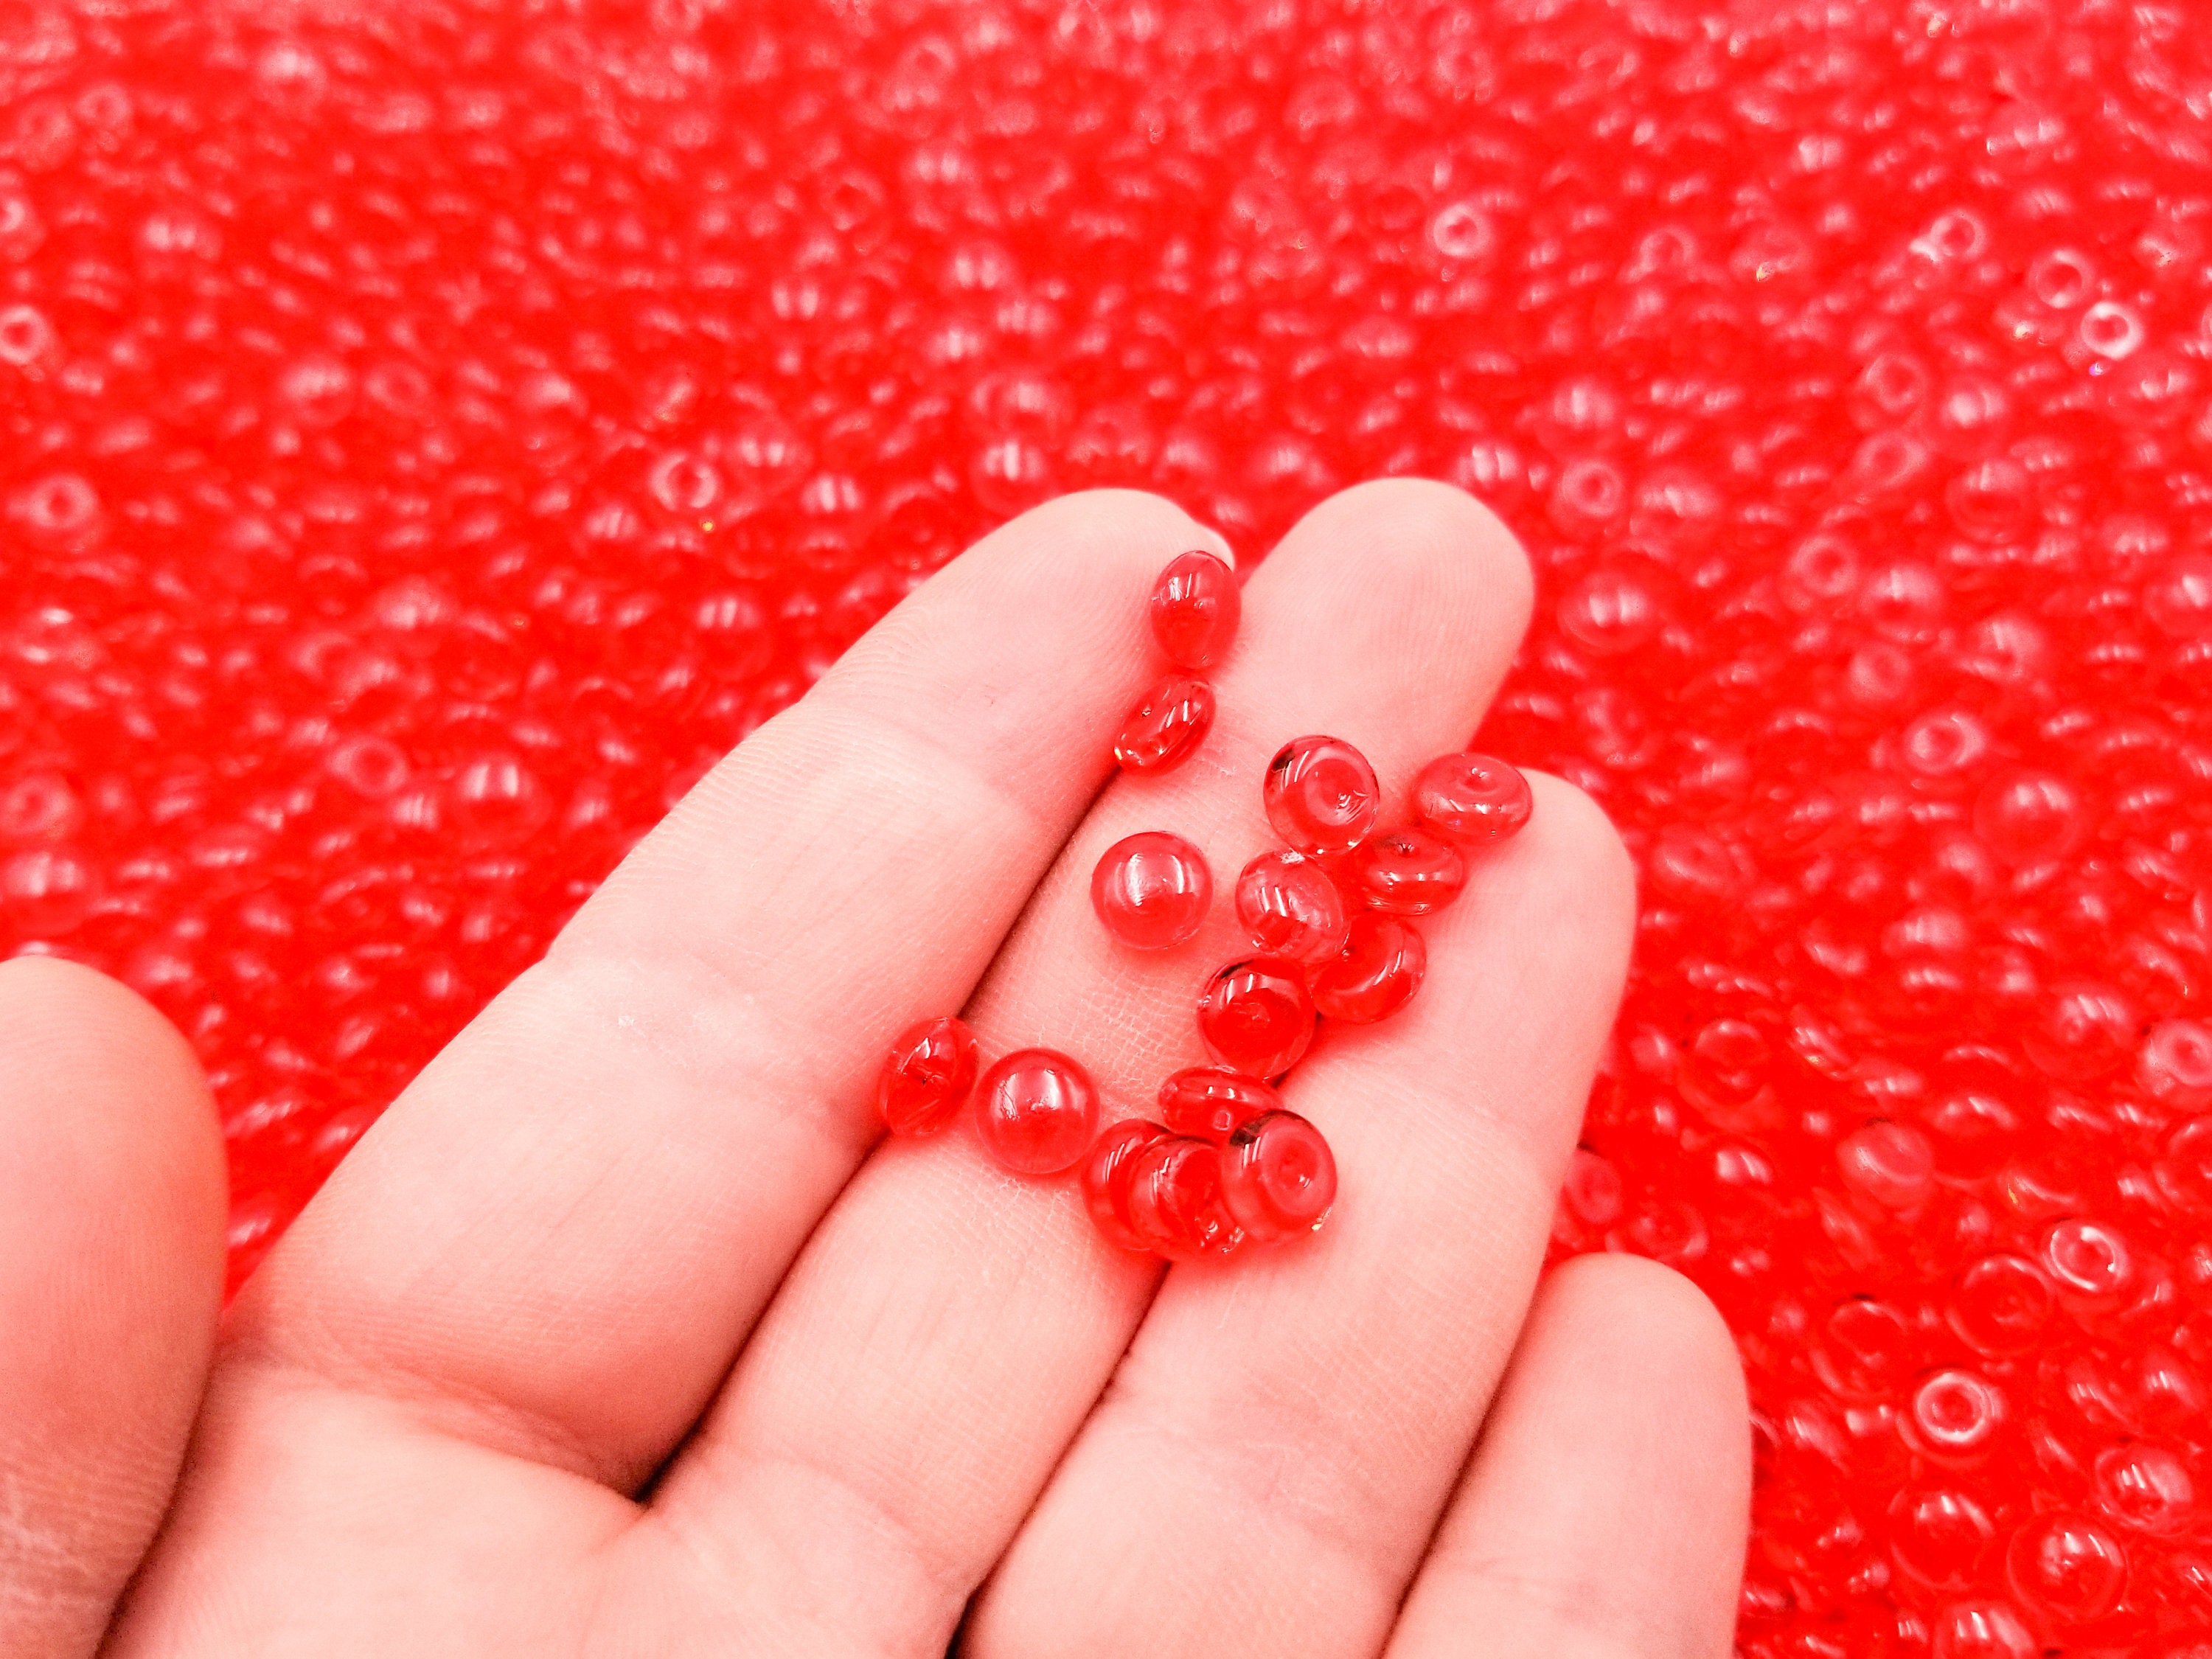 Fishbowl Beads and Slushie Beads 500grams Craft Supplies PLAYCODE3